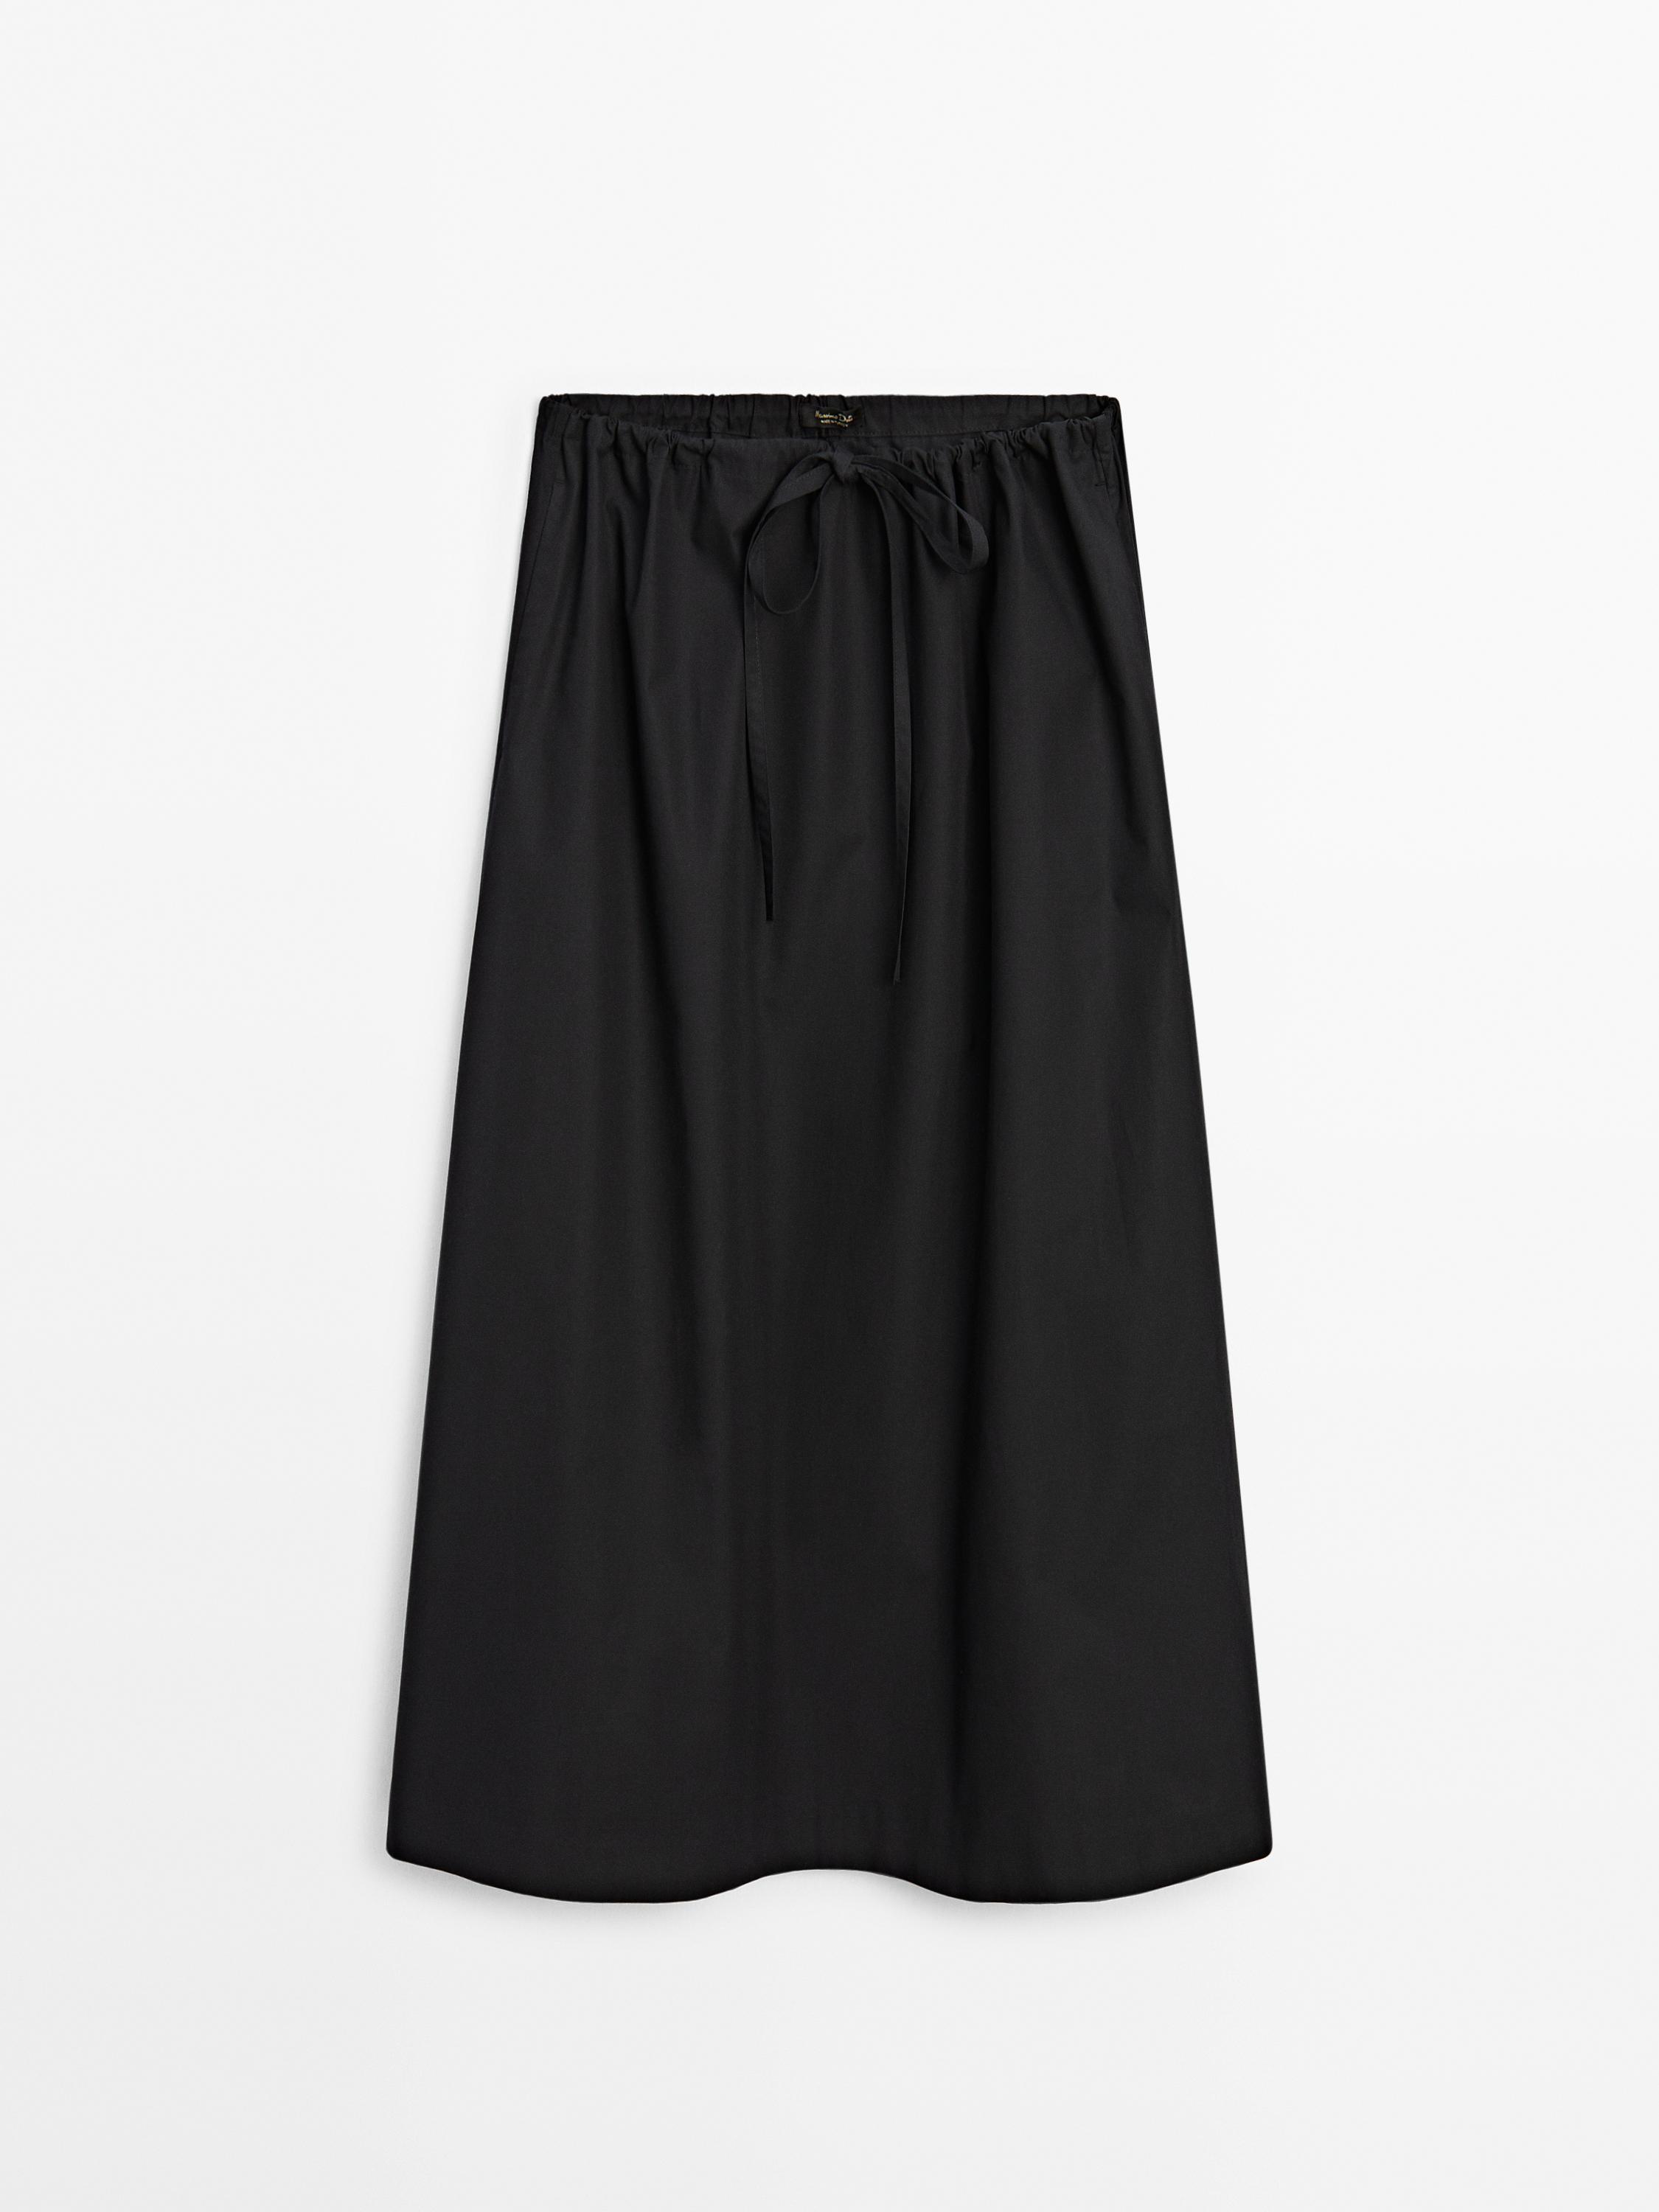 Koch EUC! Like new (never worn) Erika Skirt size Medium (black/white stripe)  Black - $80 (72% Off Retail) - From Rana